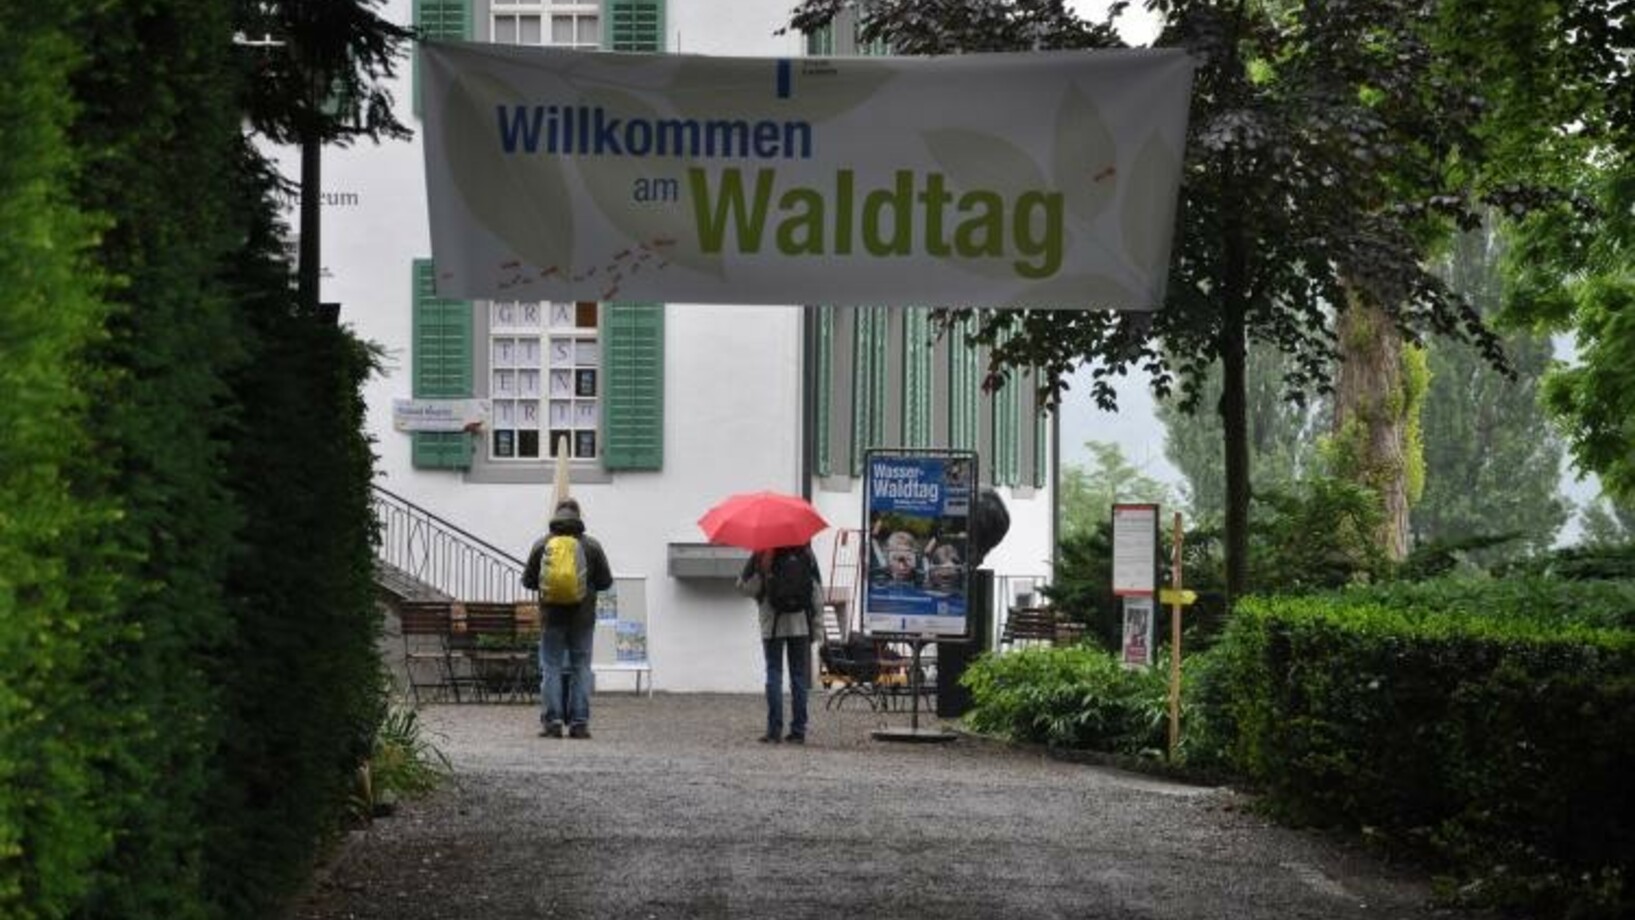 Plakat Waldtag Richard Wagnermuseum